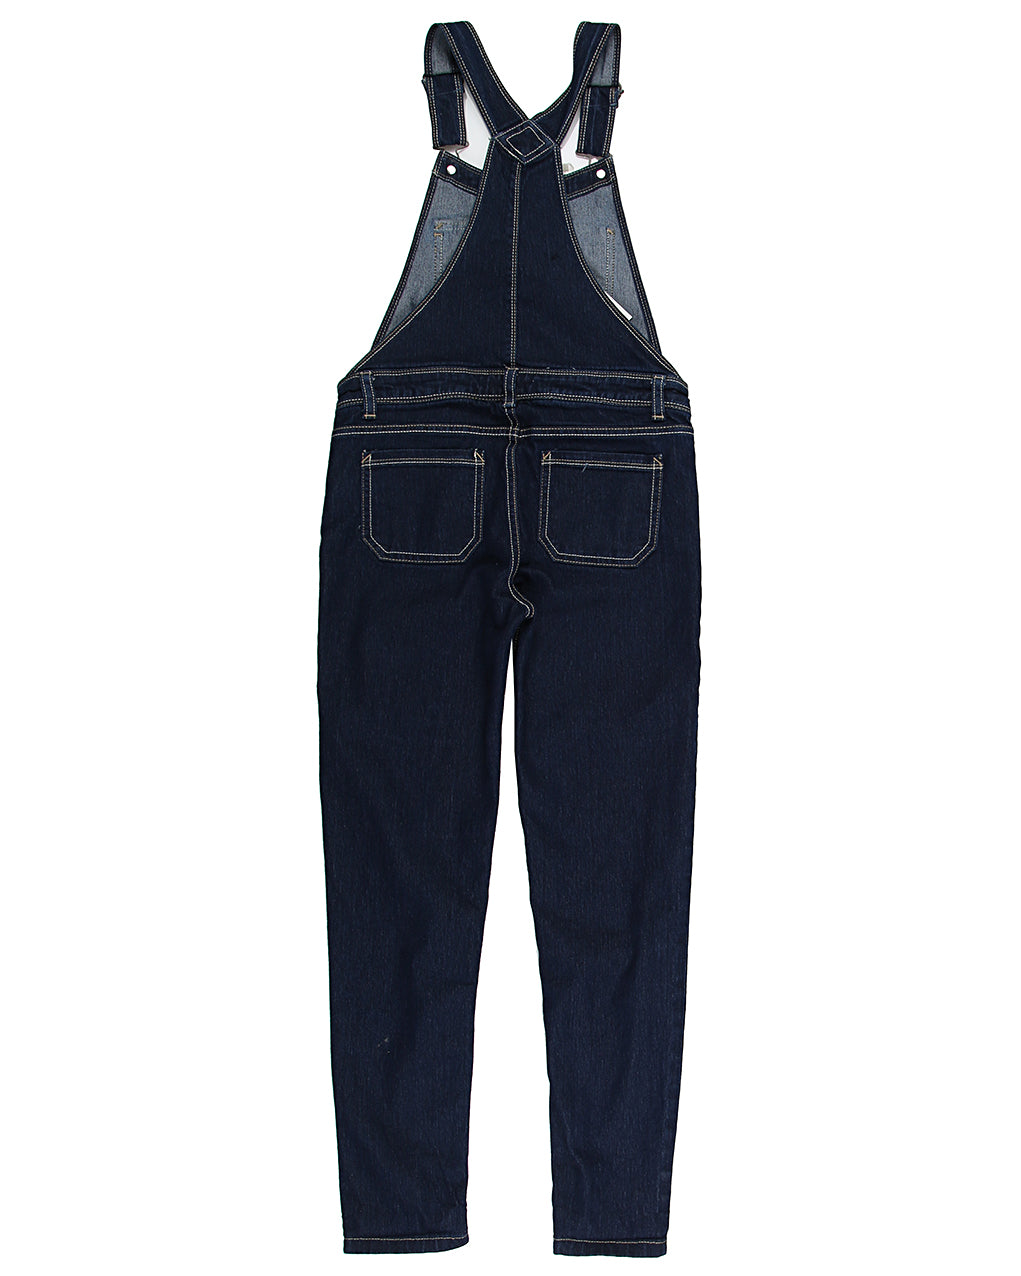 Blue Indigo Jordache Jeans - Age 10-11